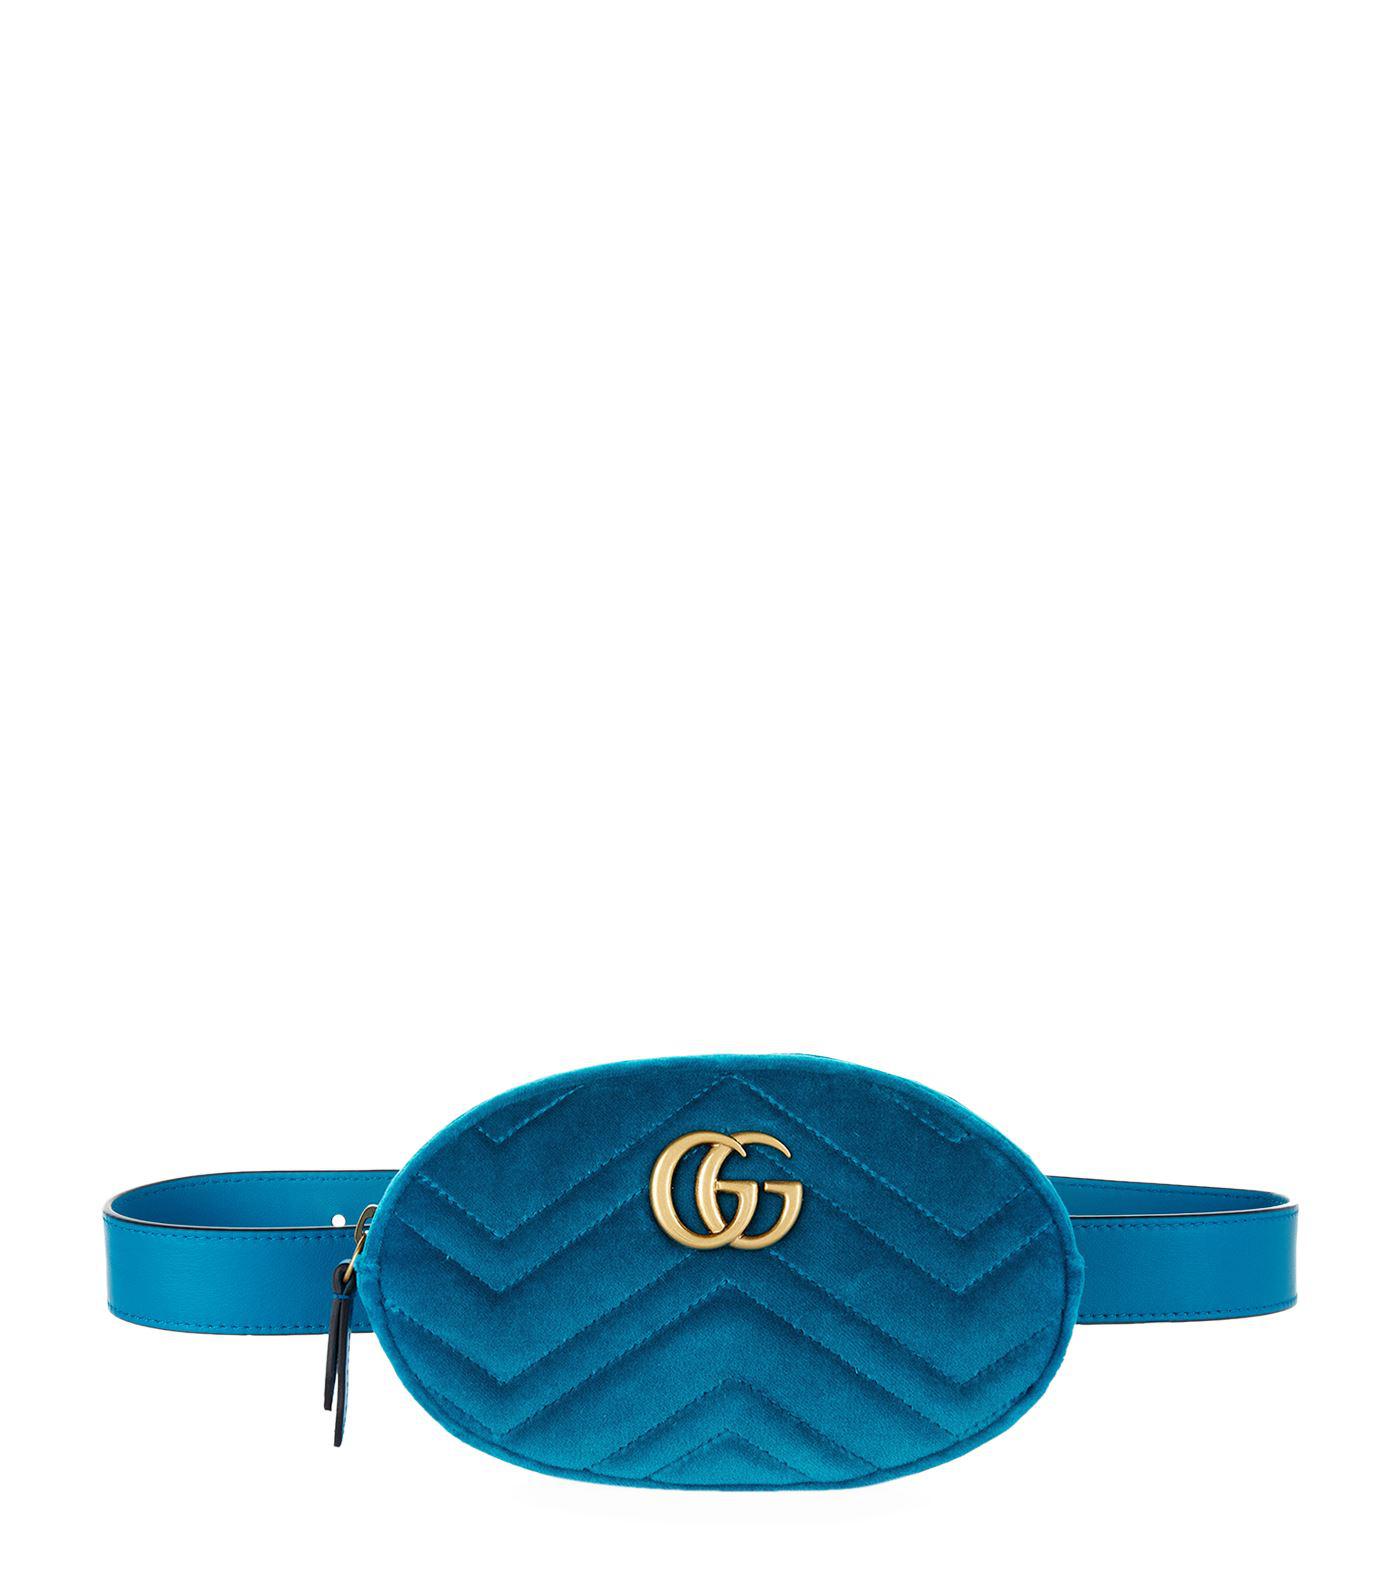 Gucci Marmont Velvet Belt Bag in Blue - Lyst